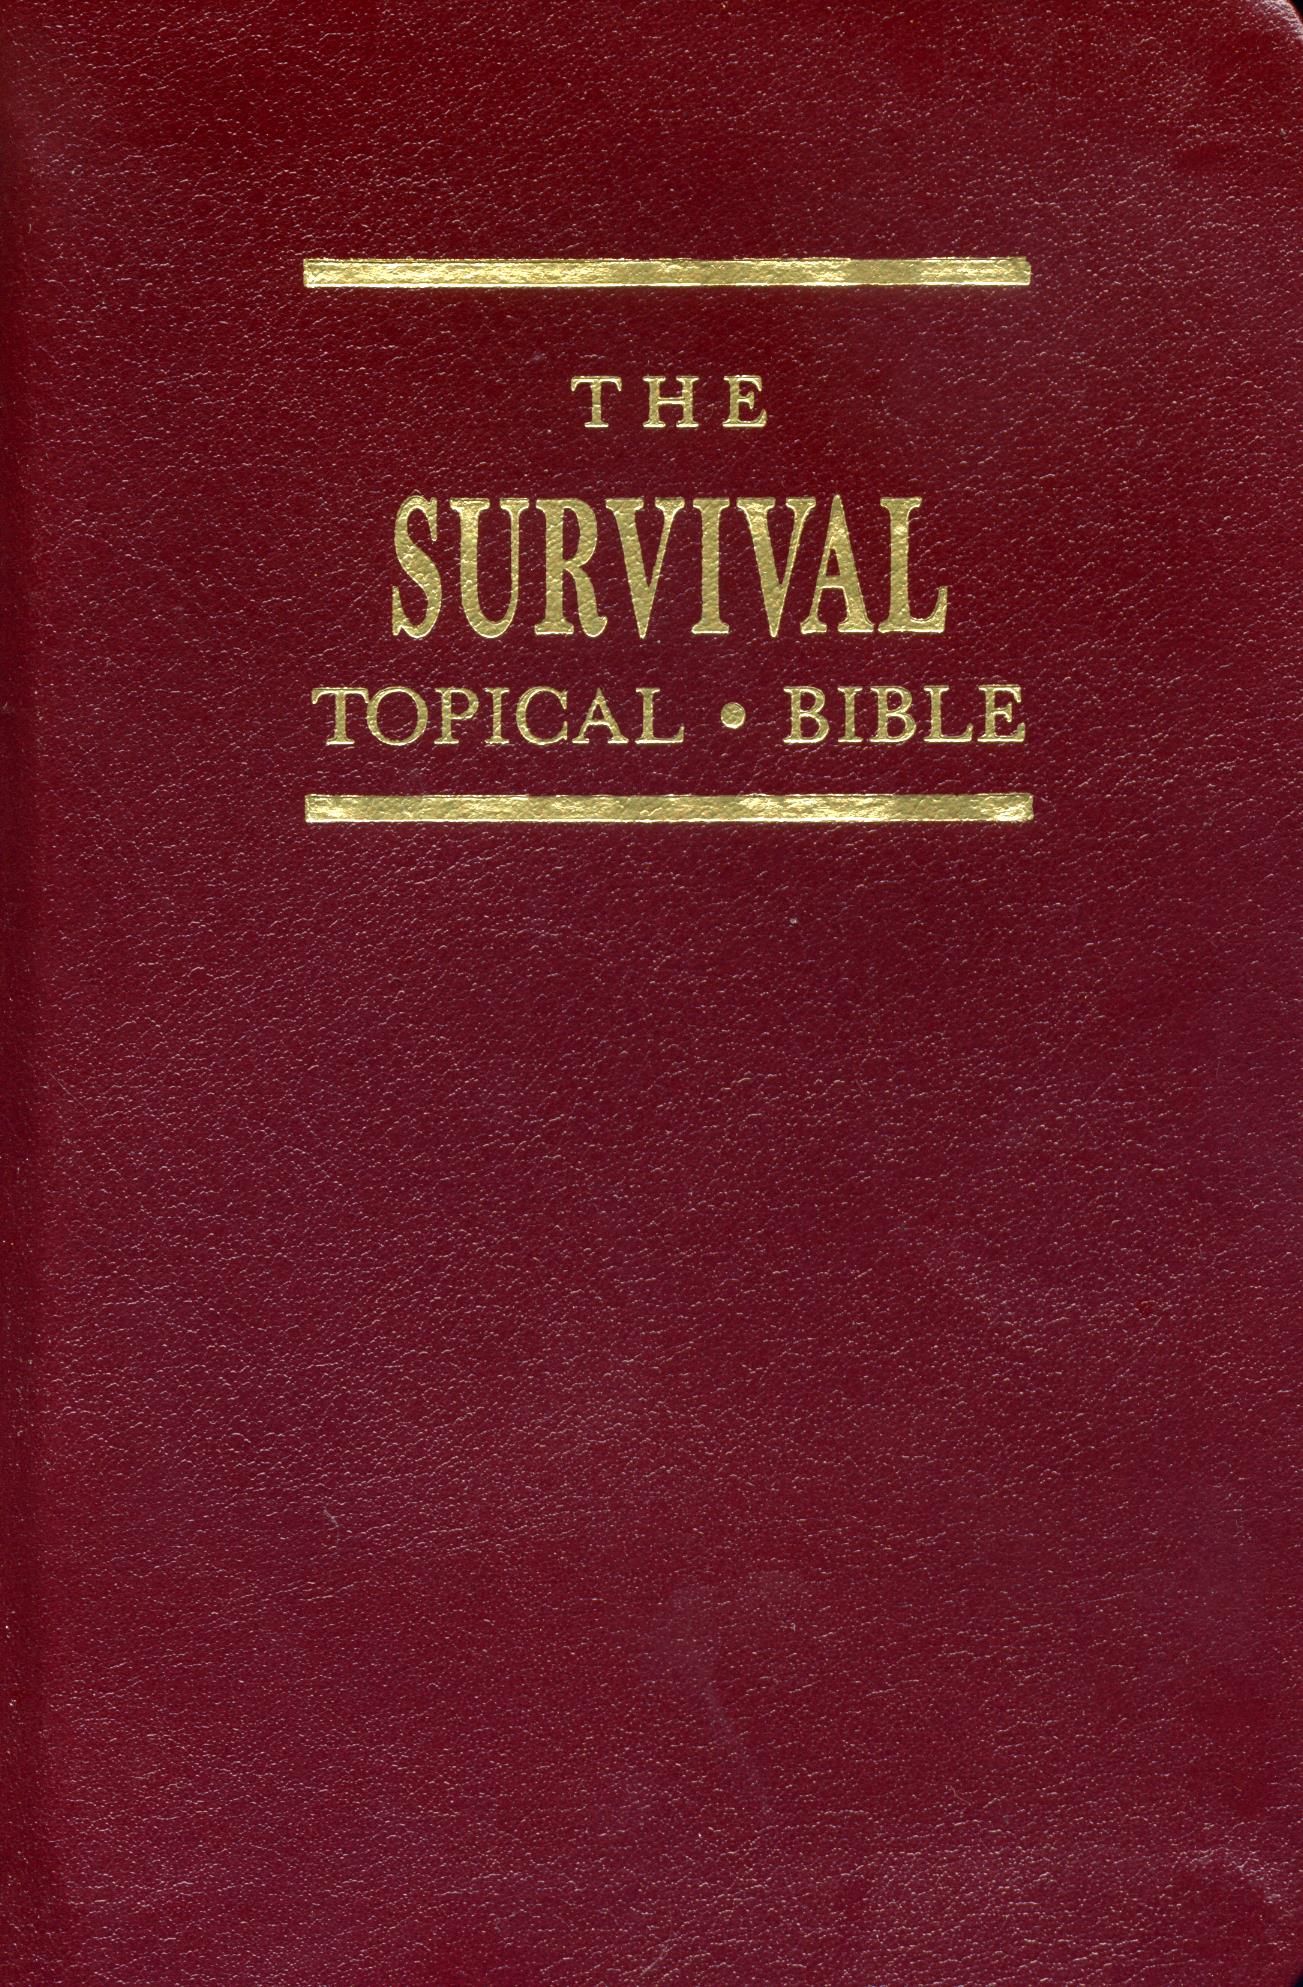 Englische Bücher - Bibeln - Harrison House: The Survival Topical Bible